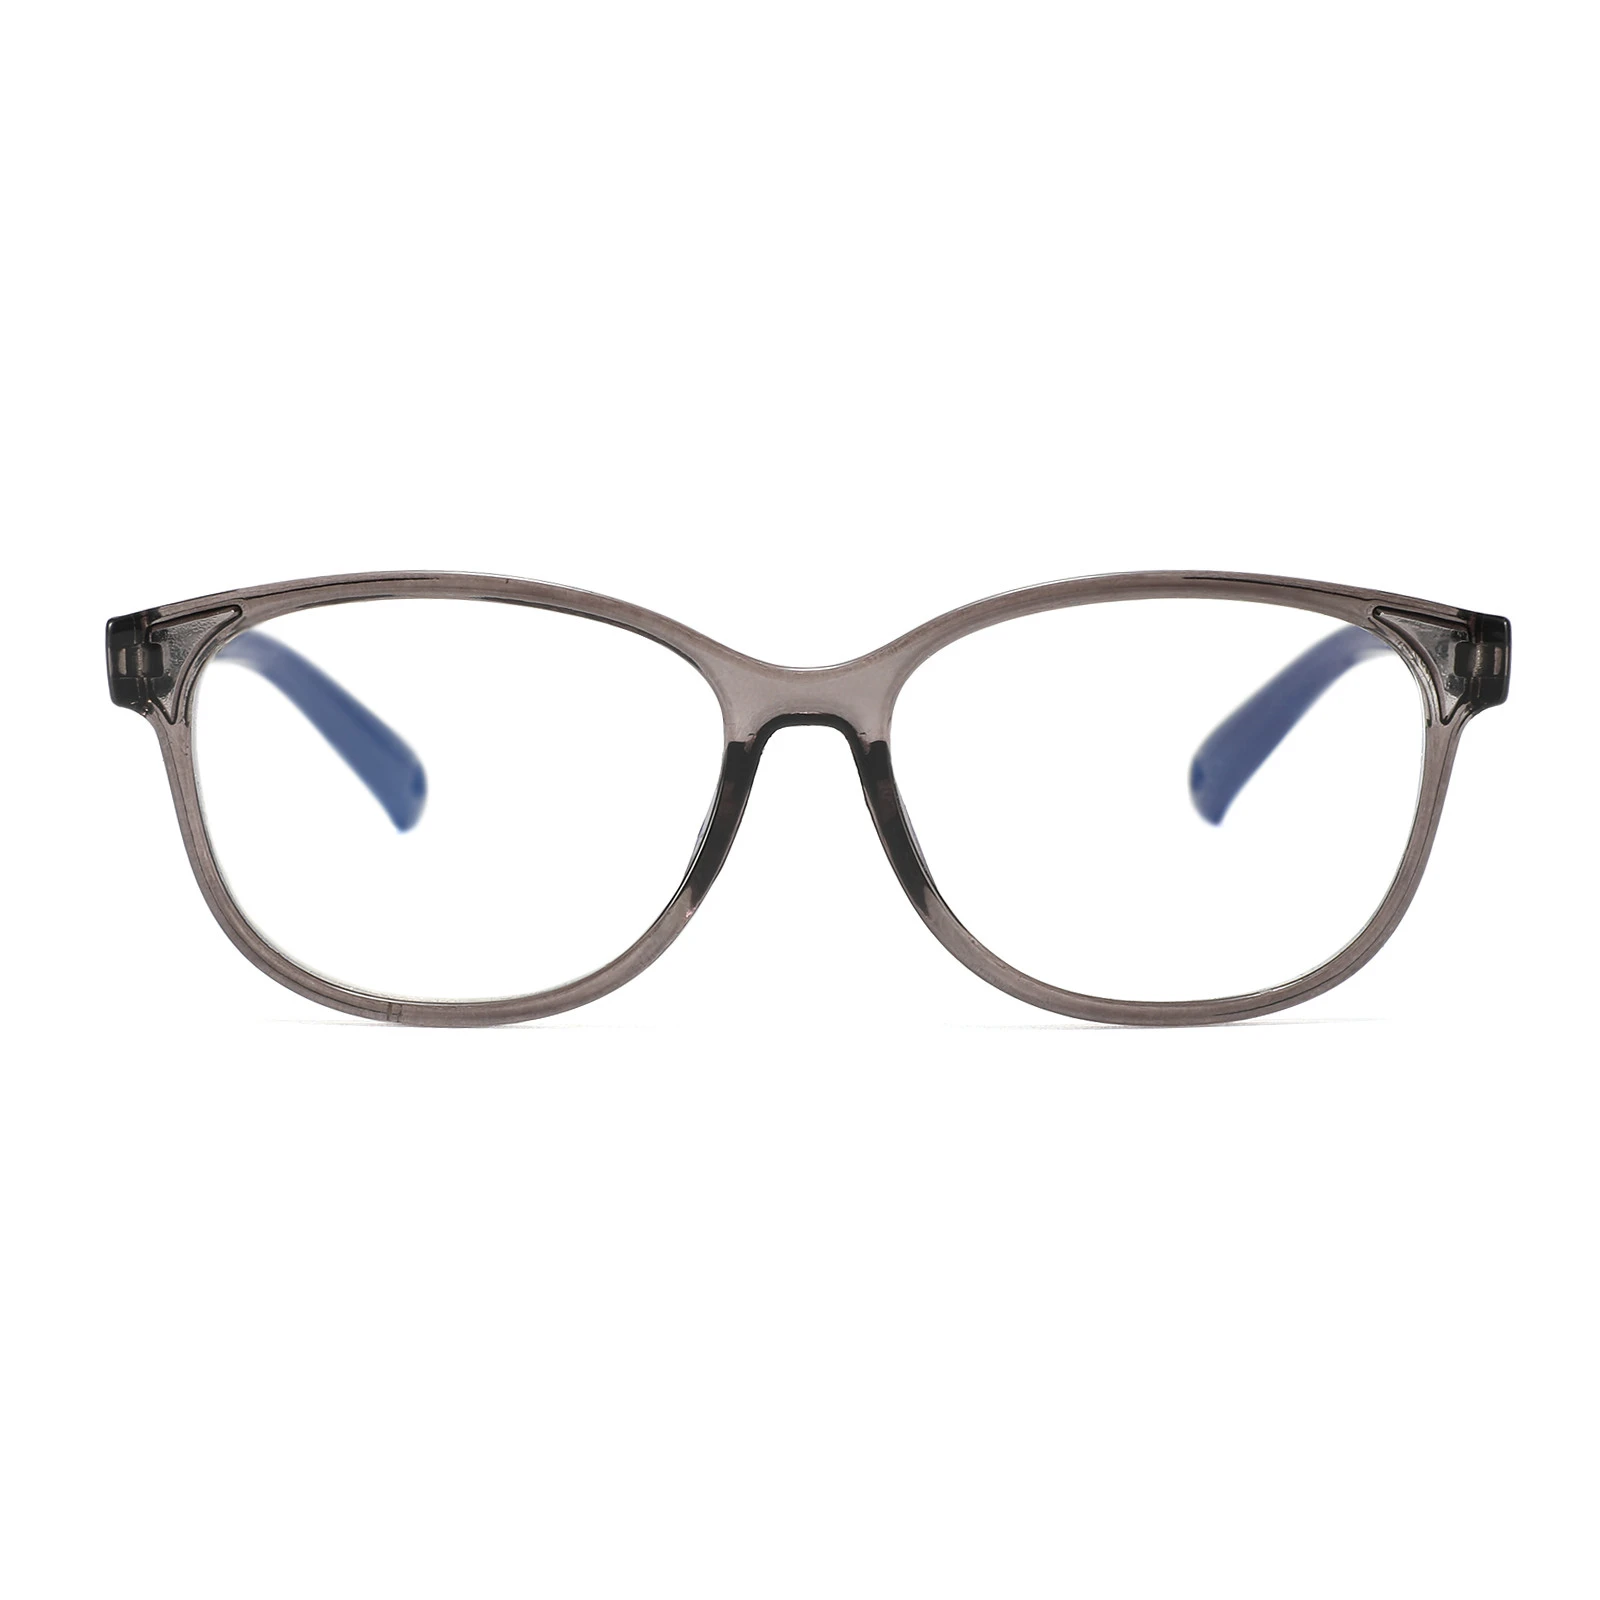 2021 trendy eyeglasses frames optical fashion TR90 blue light blocker computer glasses